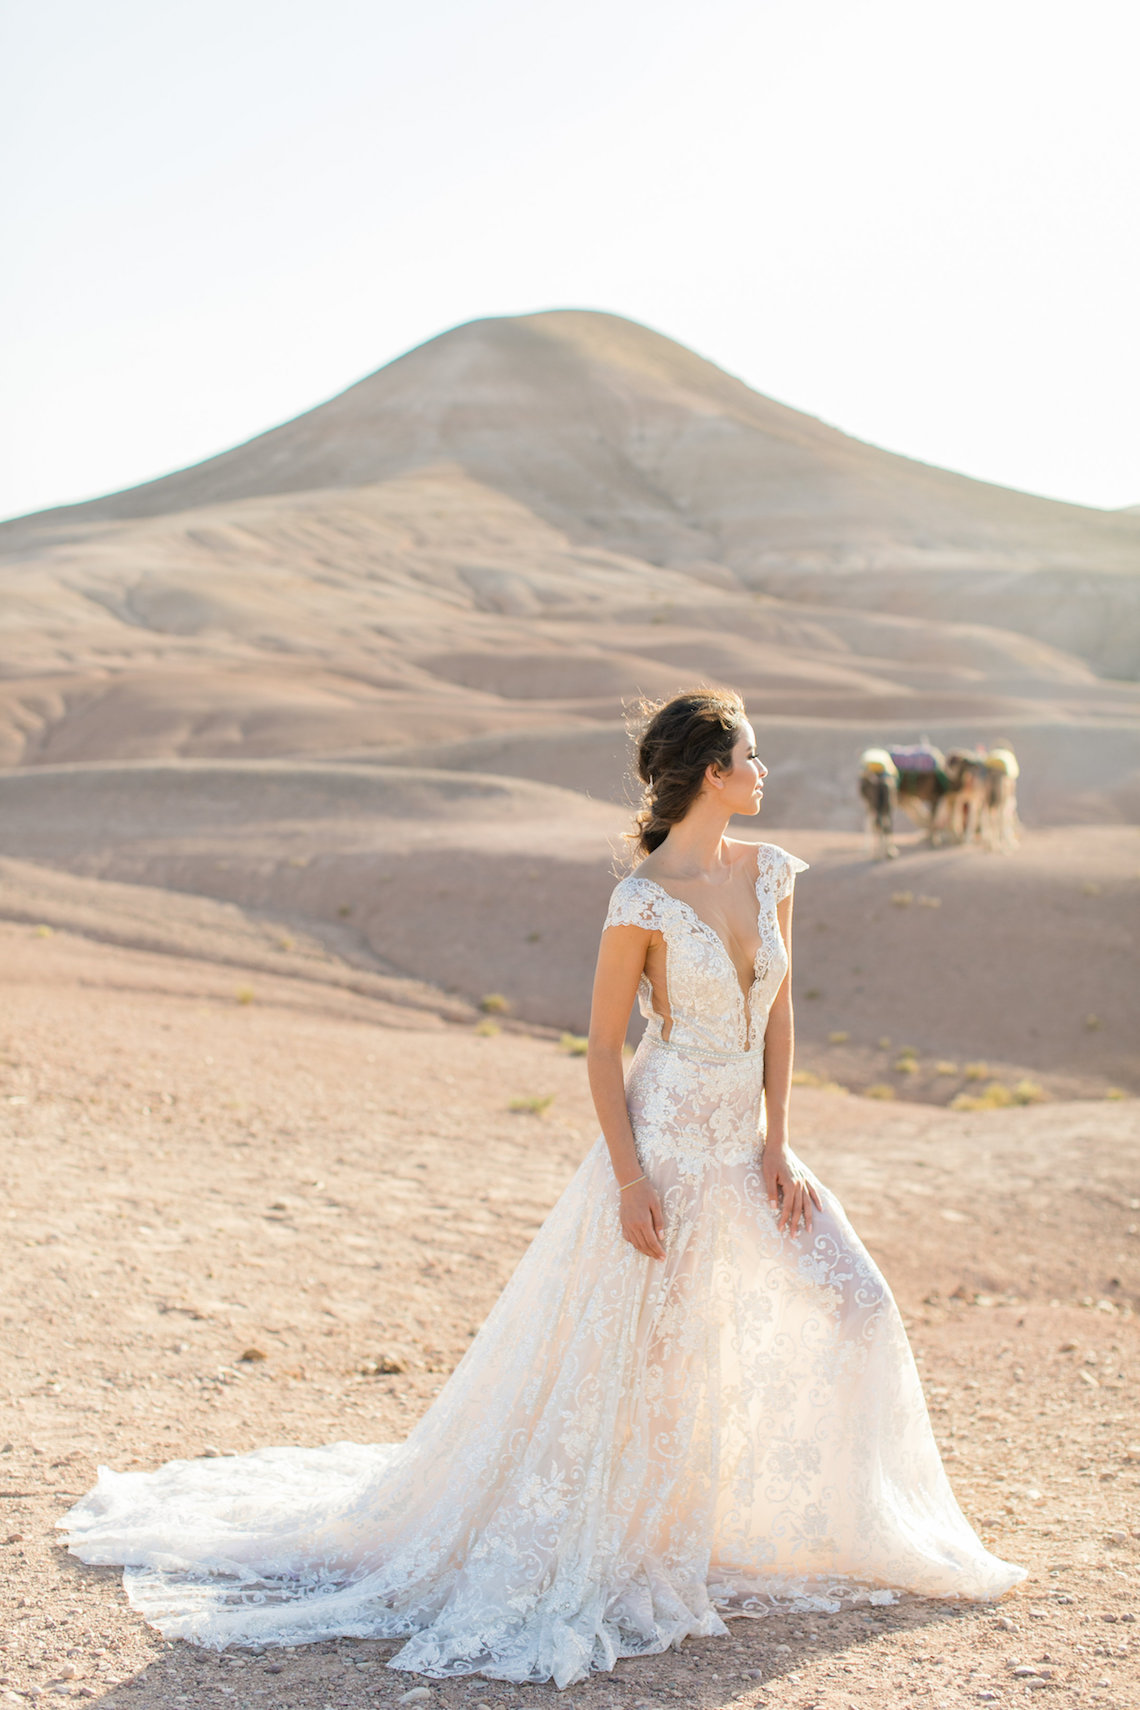 destination wedding in the desert in morocco